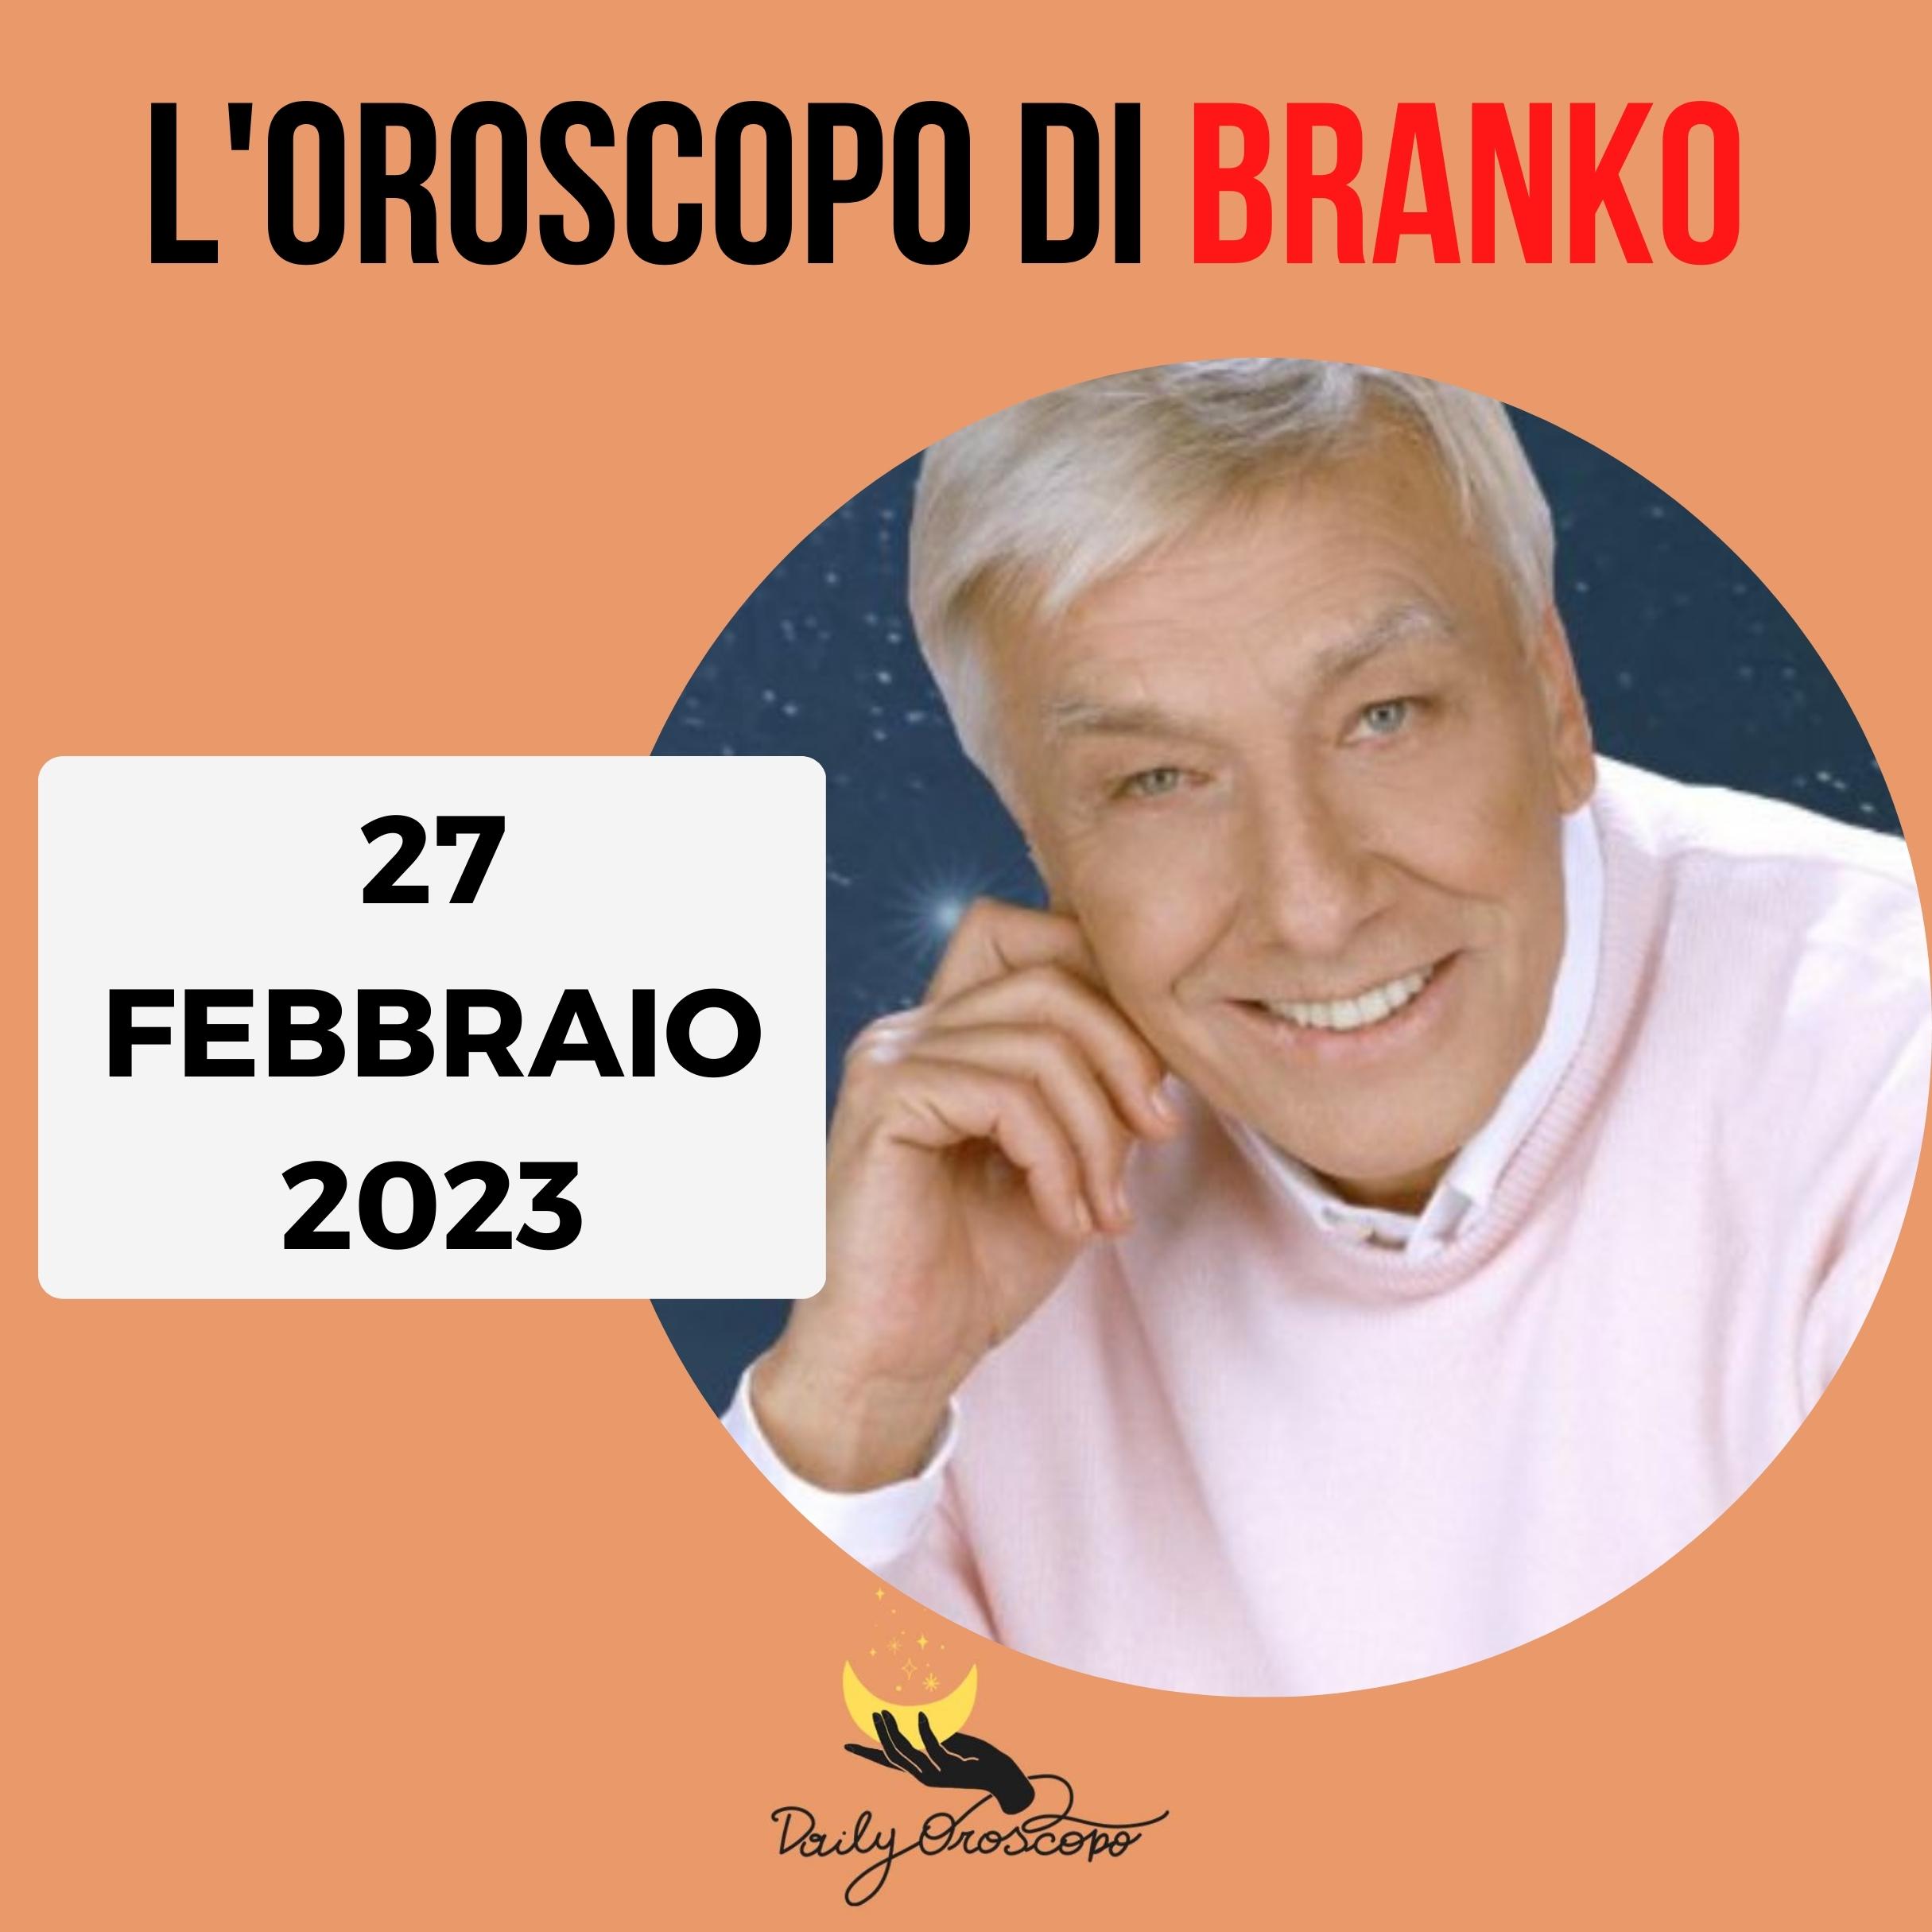 Oroscopo Branko oggi 27 febbraio 2023